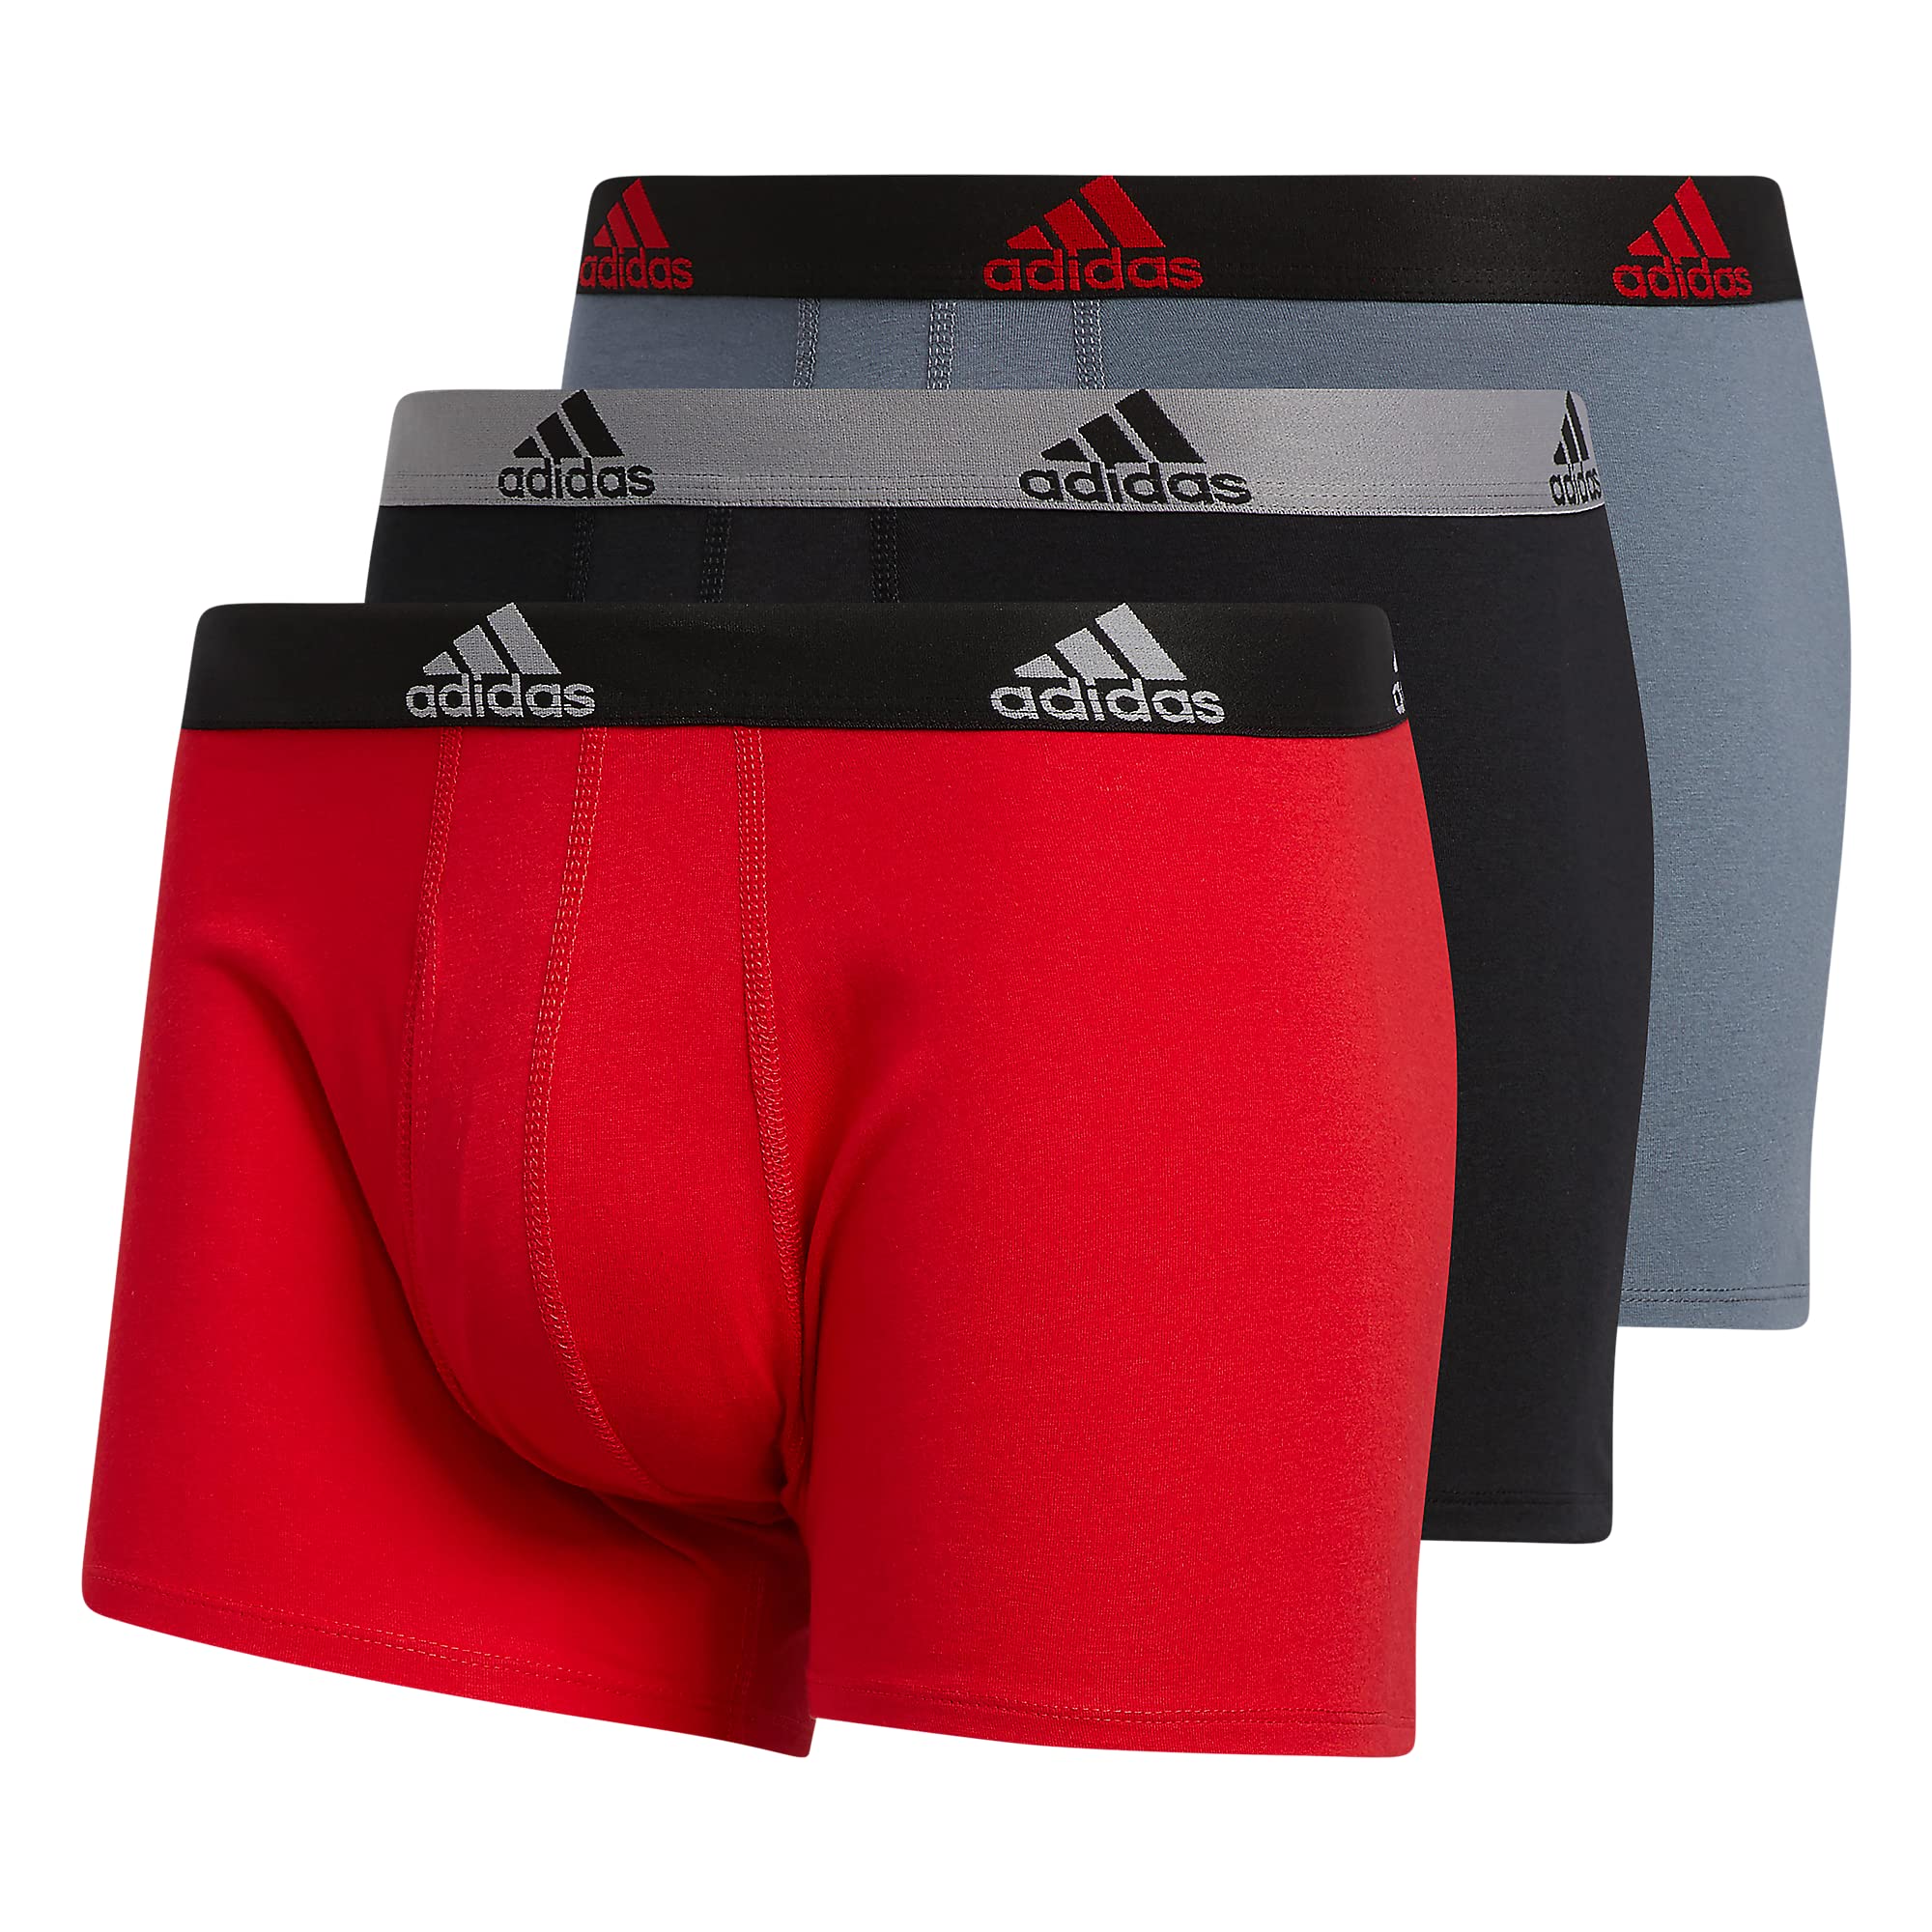 3-Pack adidas Men's Stretch Trunk Underwear (XX-Large ONLY) $9.80